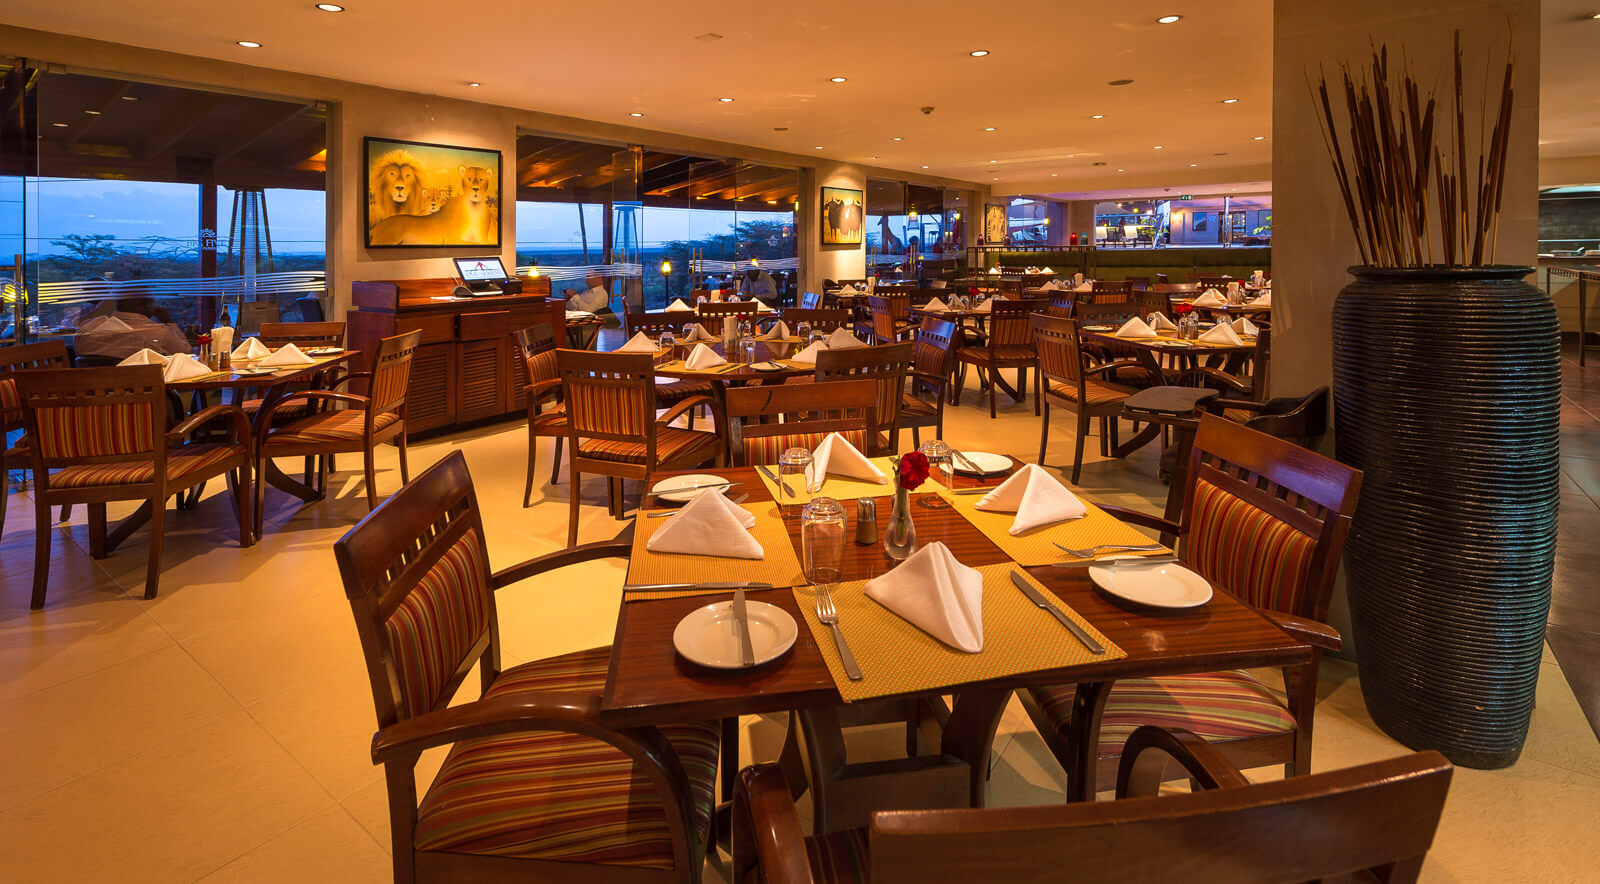 Enjoy buffet at The Big Five Restaurant in Ole Sereni Hotel